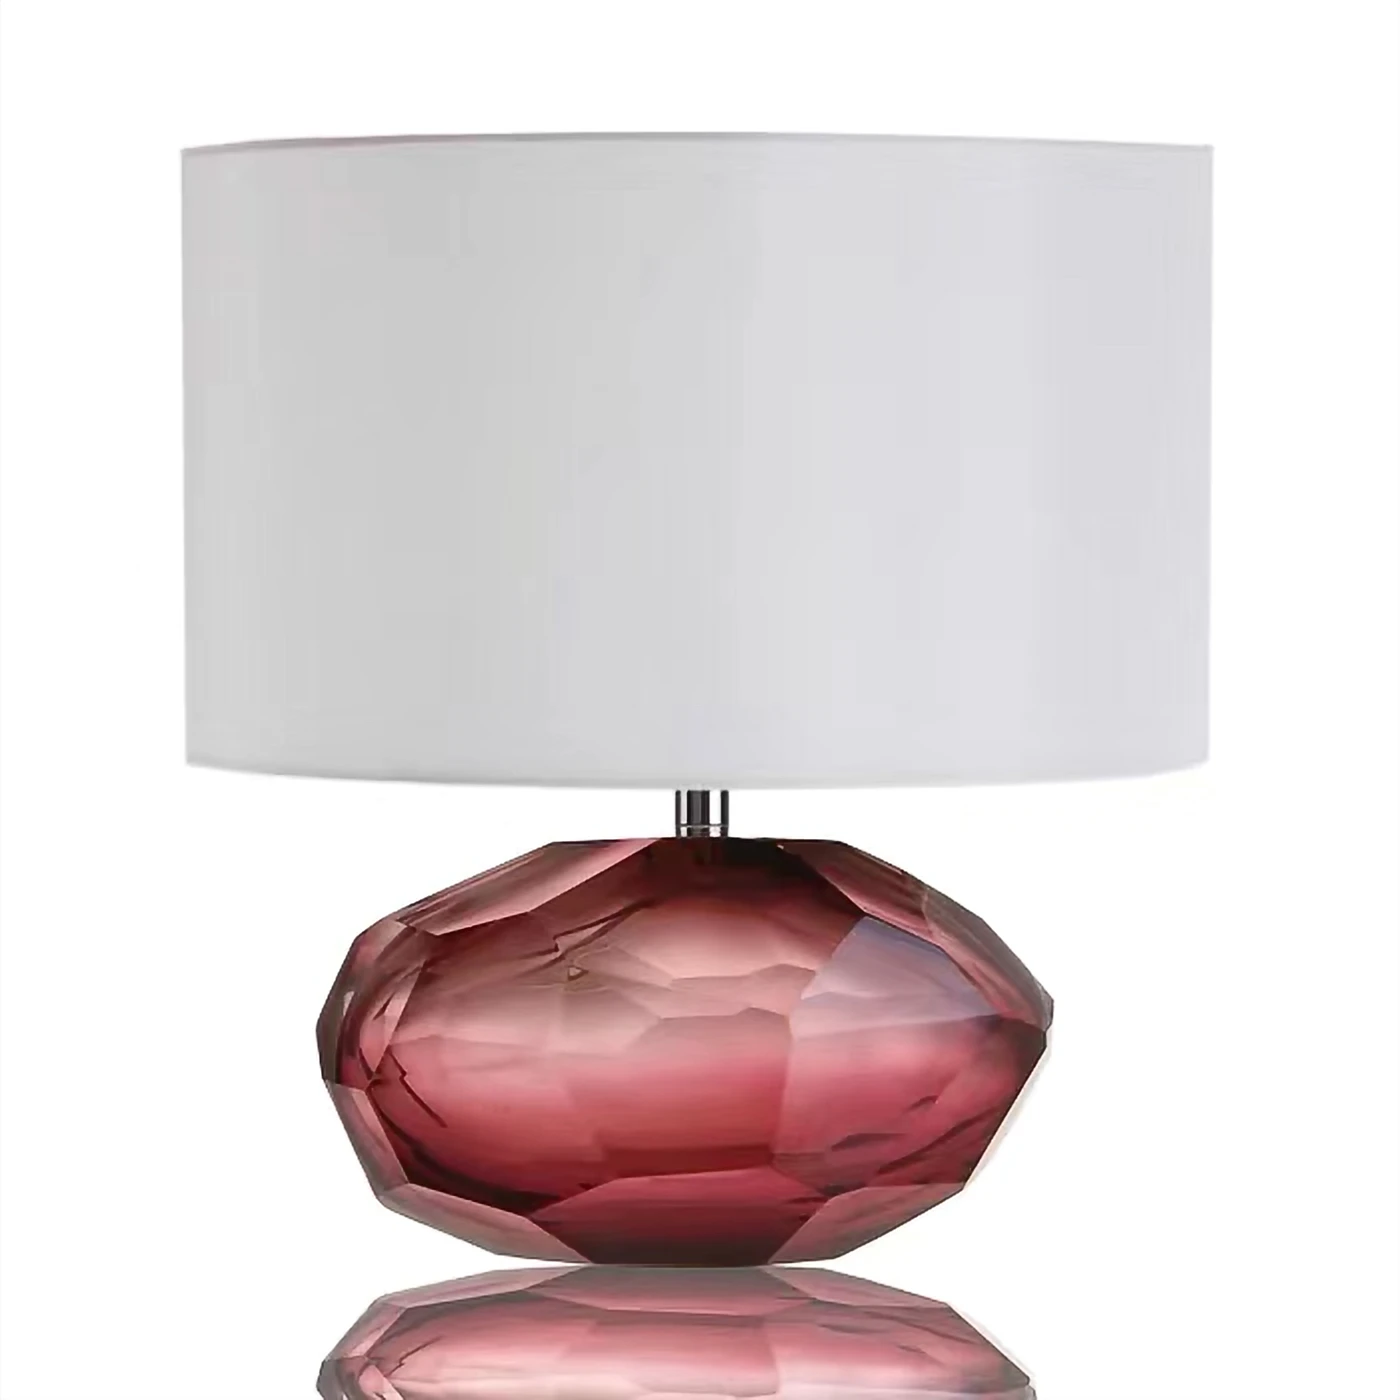 Art  Handmade Luxury Bed Lamp  Beautiful Table Light With  Circular Chimney  2020 Hot Sale Desk Lamp